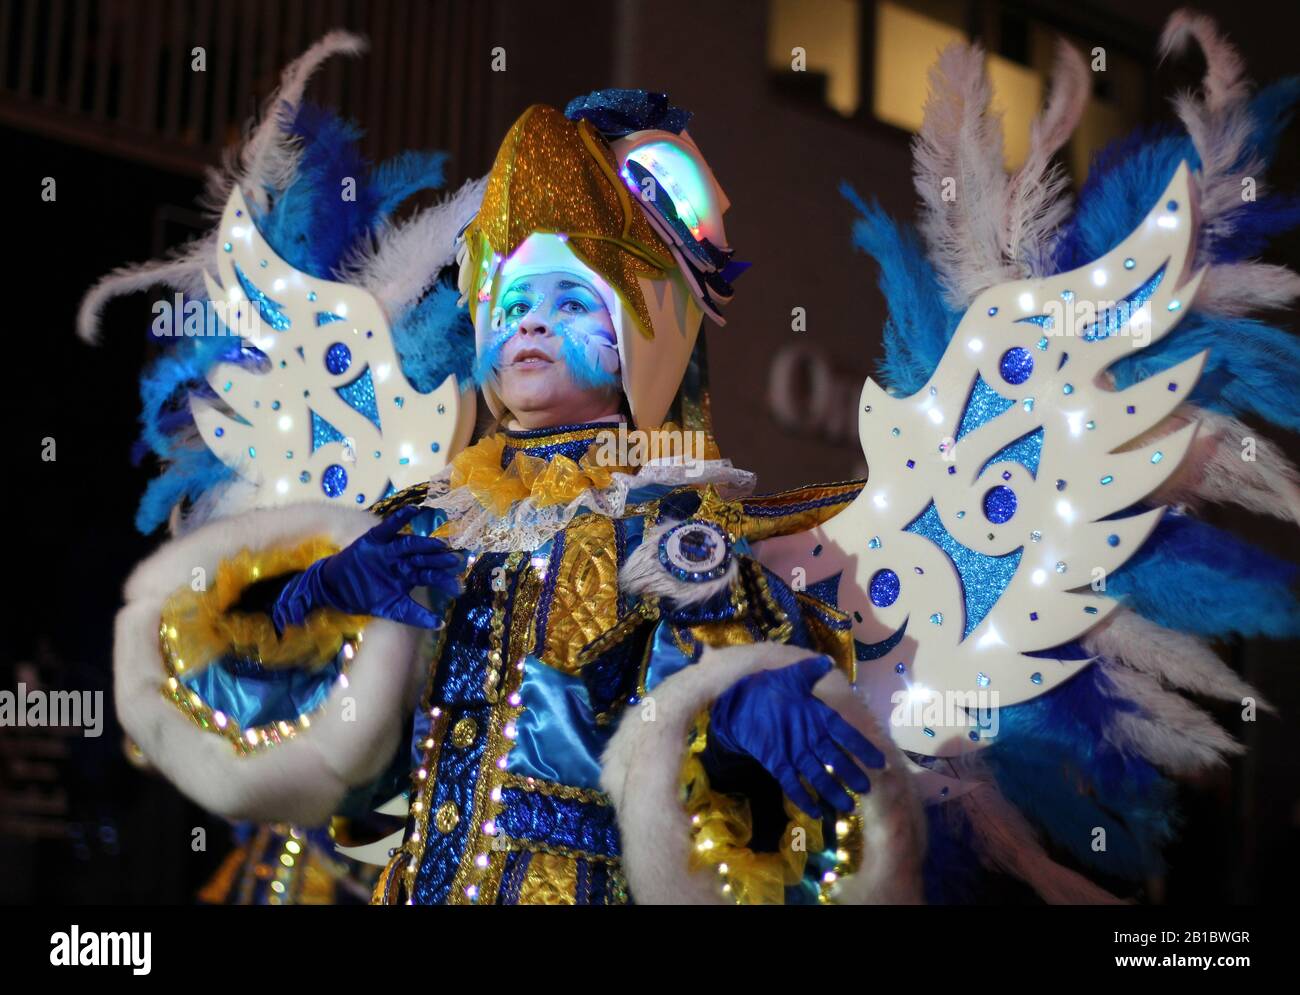 AALST, BELGIUM, 23 FEBRUARY 2020: Unknown carnival participant in bright blue illuminated costume dances in the annual Mardi Gras parade. Stock Photo